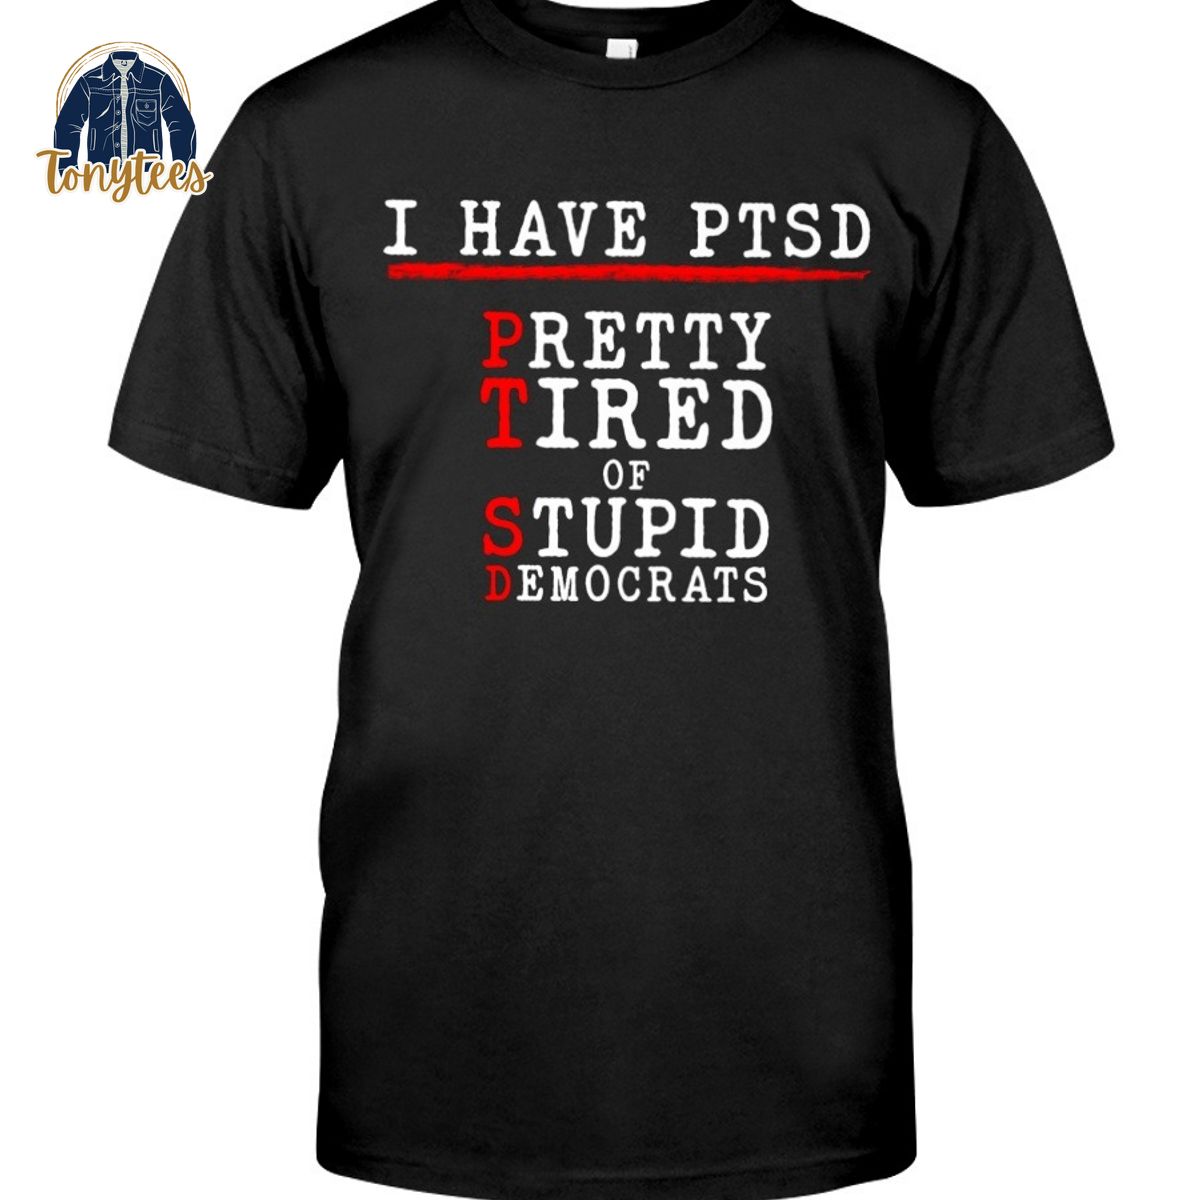 I Have PTSD Pretty Tired of Stupid Democrats shirt